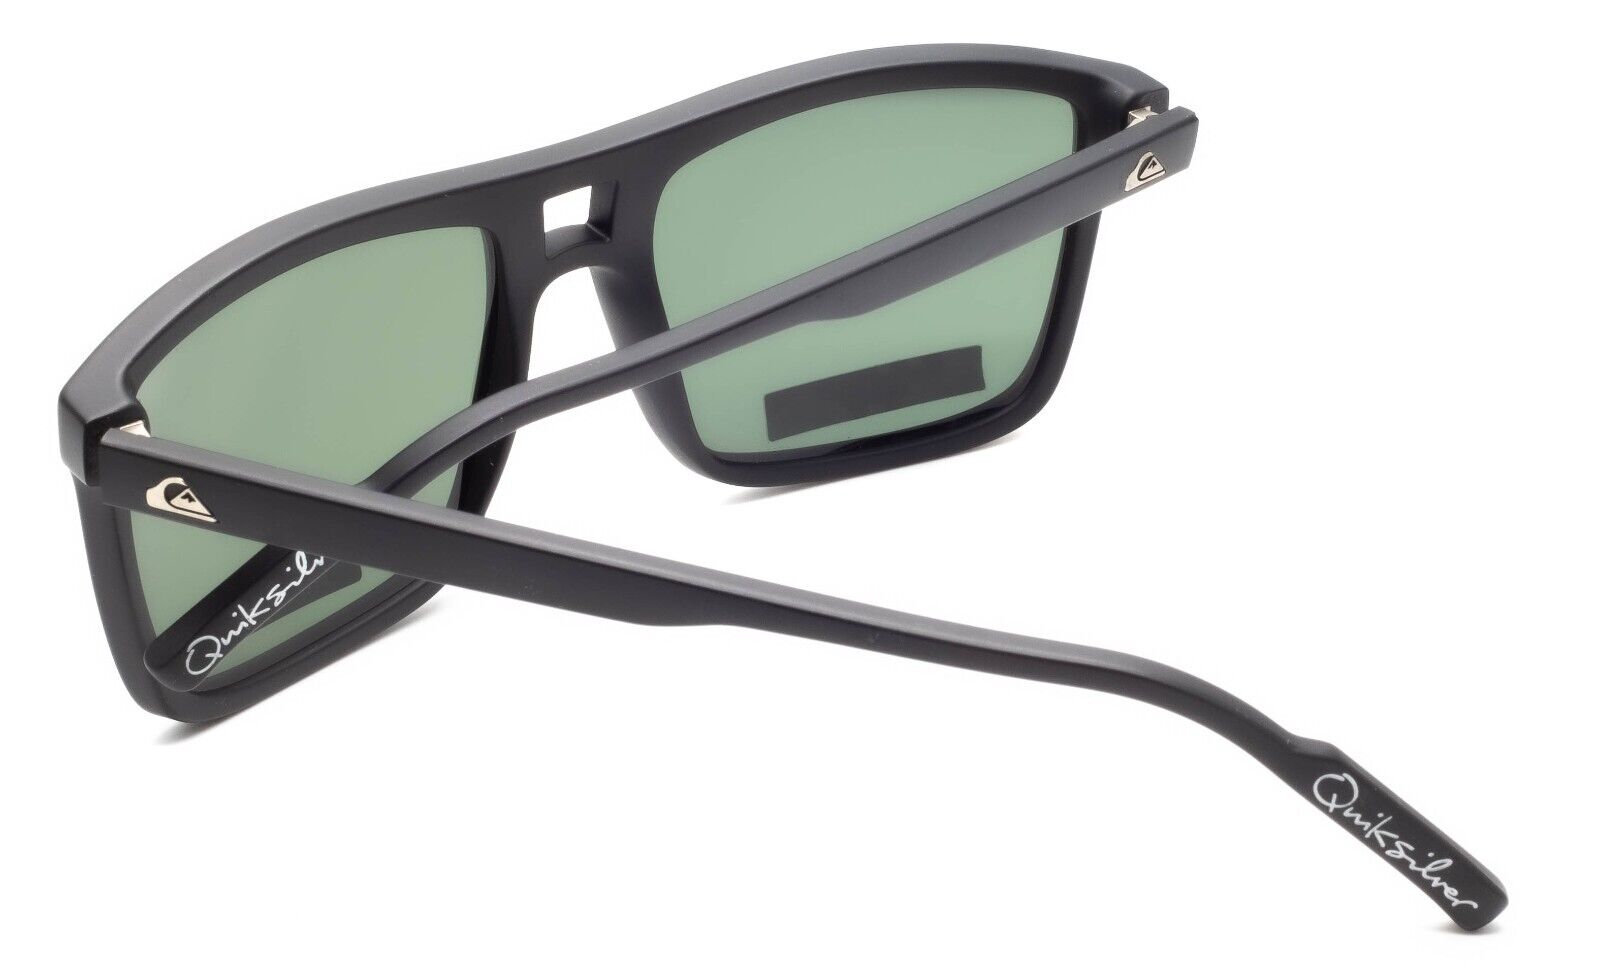 QUIKSILVER EQYEY03043 XKKS UV cat 3 DEVILLE 54mm Sunglasses Shades Eyewear  Italy - GGV Eyewear